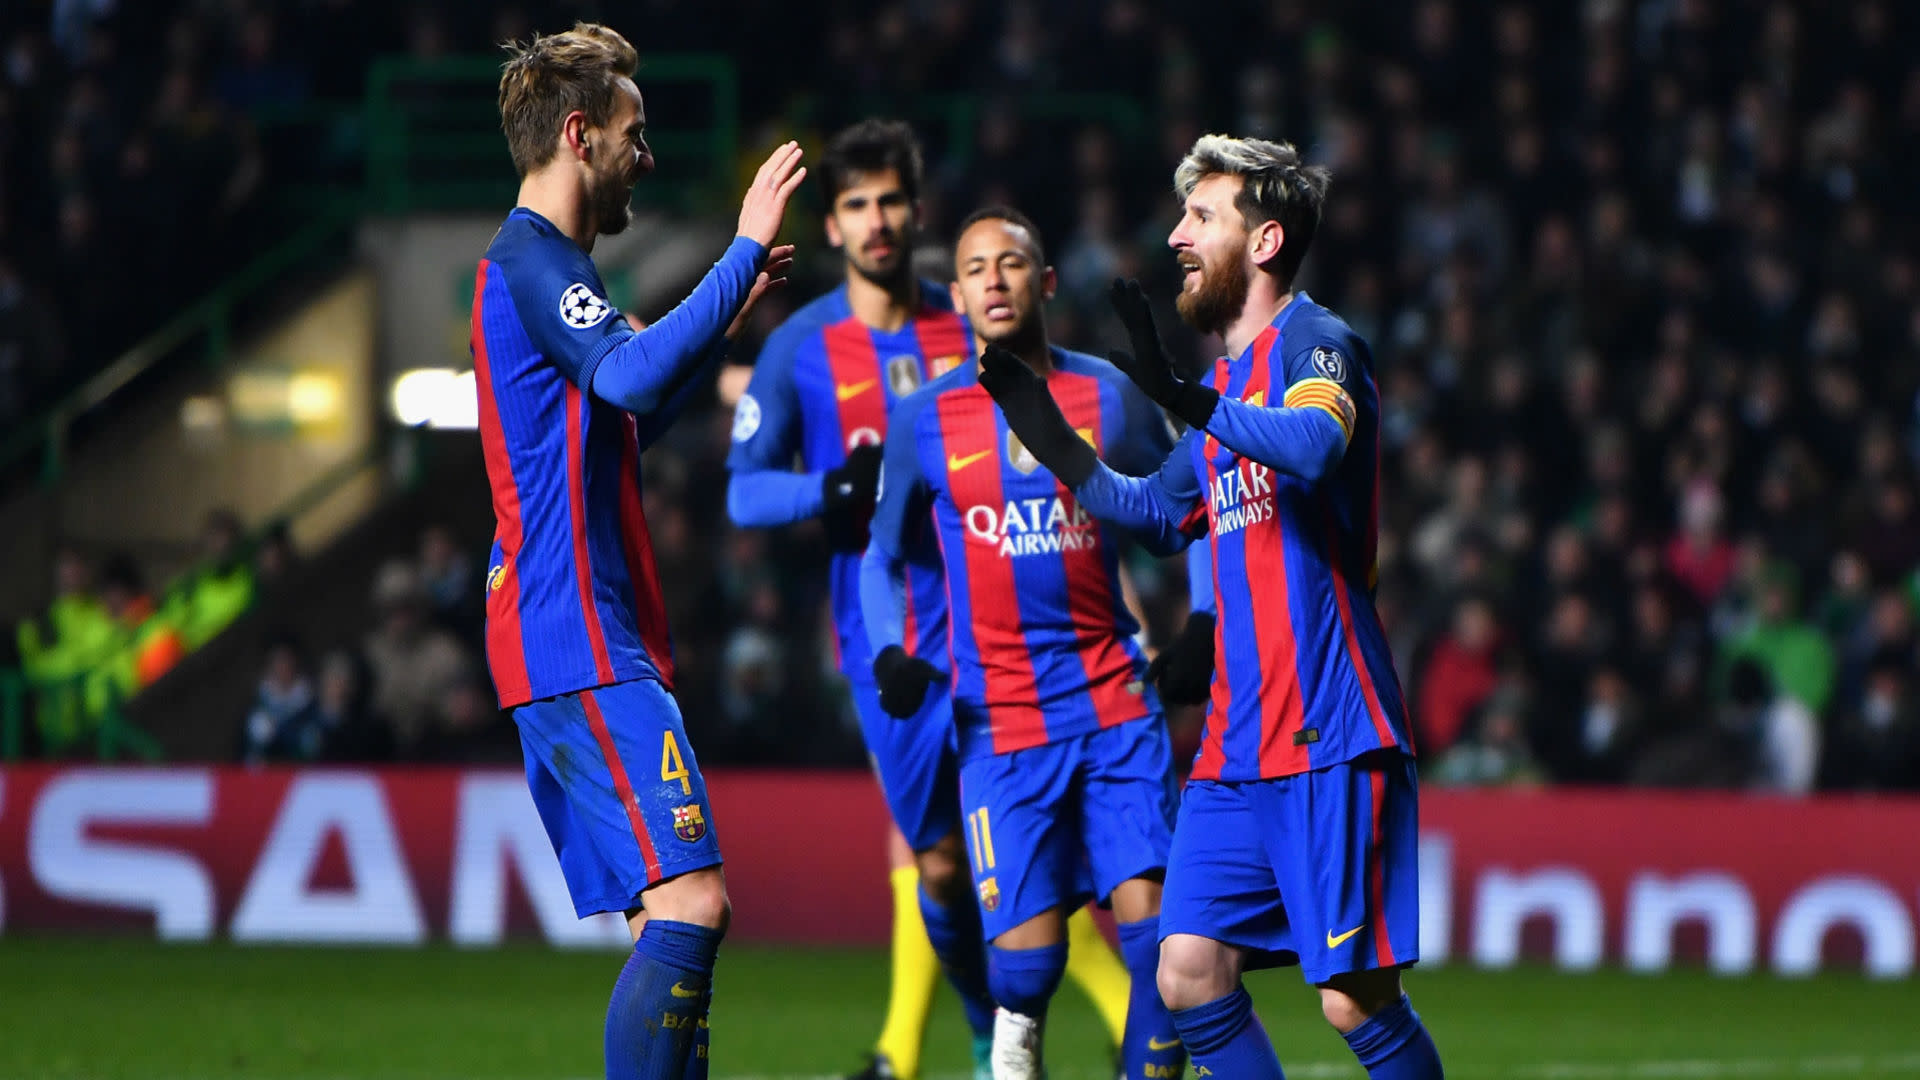 LaLiga: 'MSN avoid partying' – Rakitic enjoying Barca's family culture